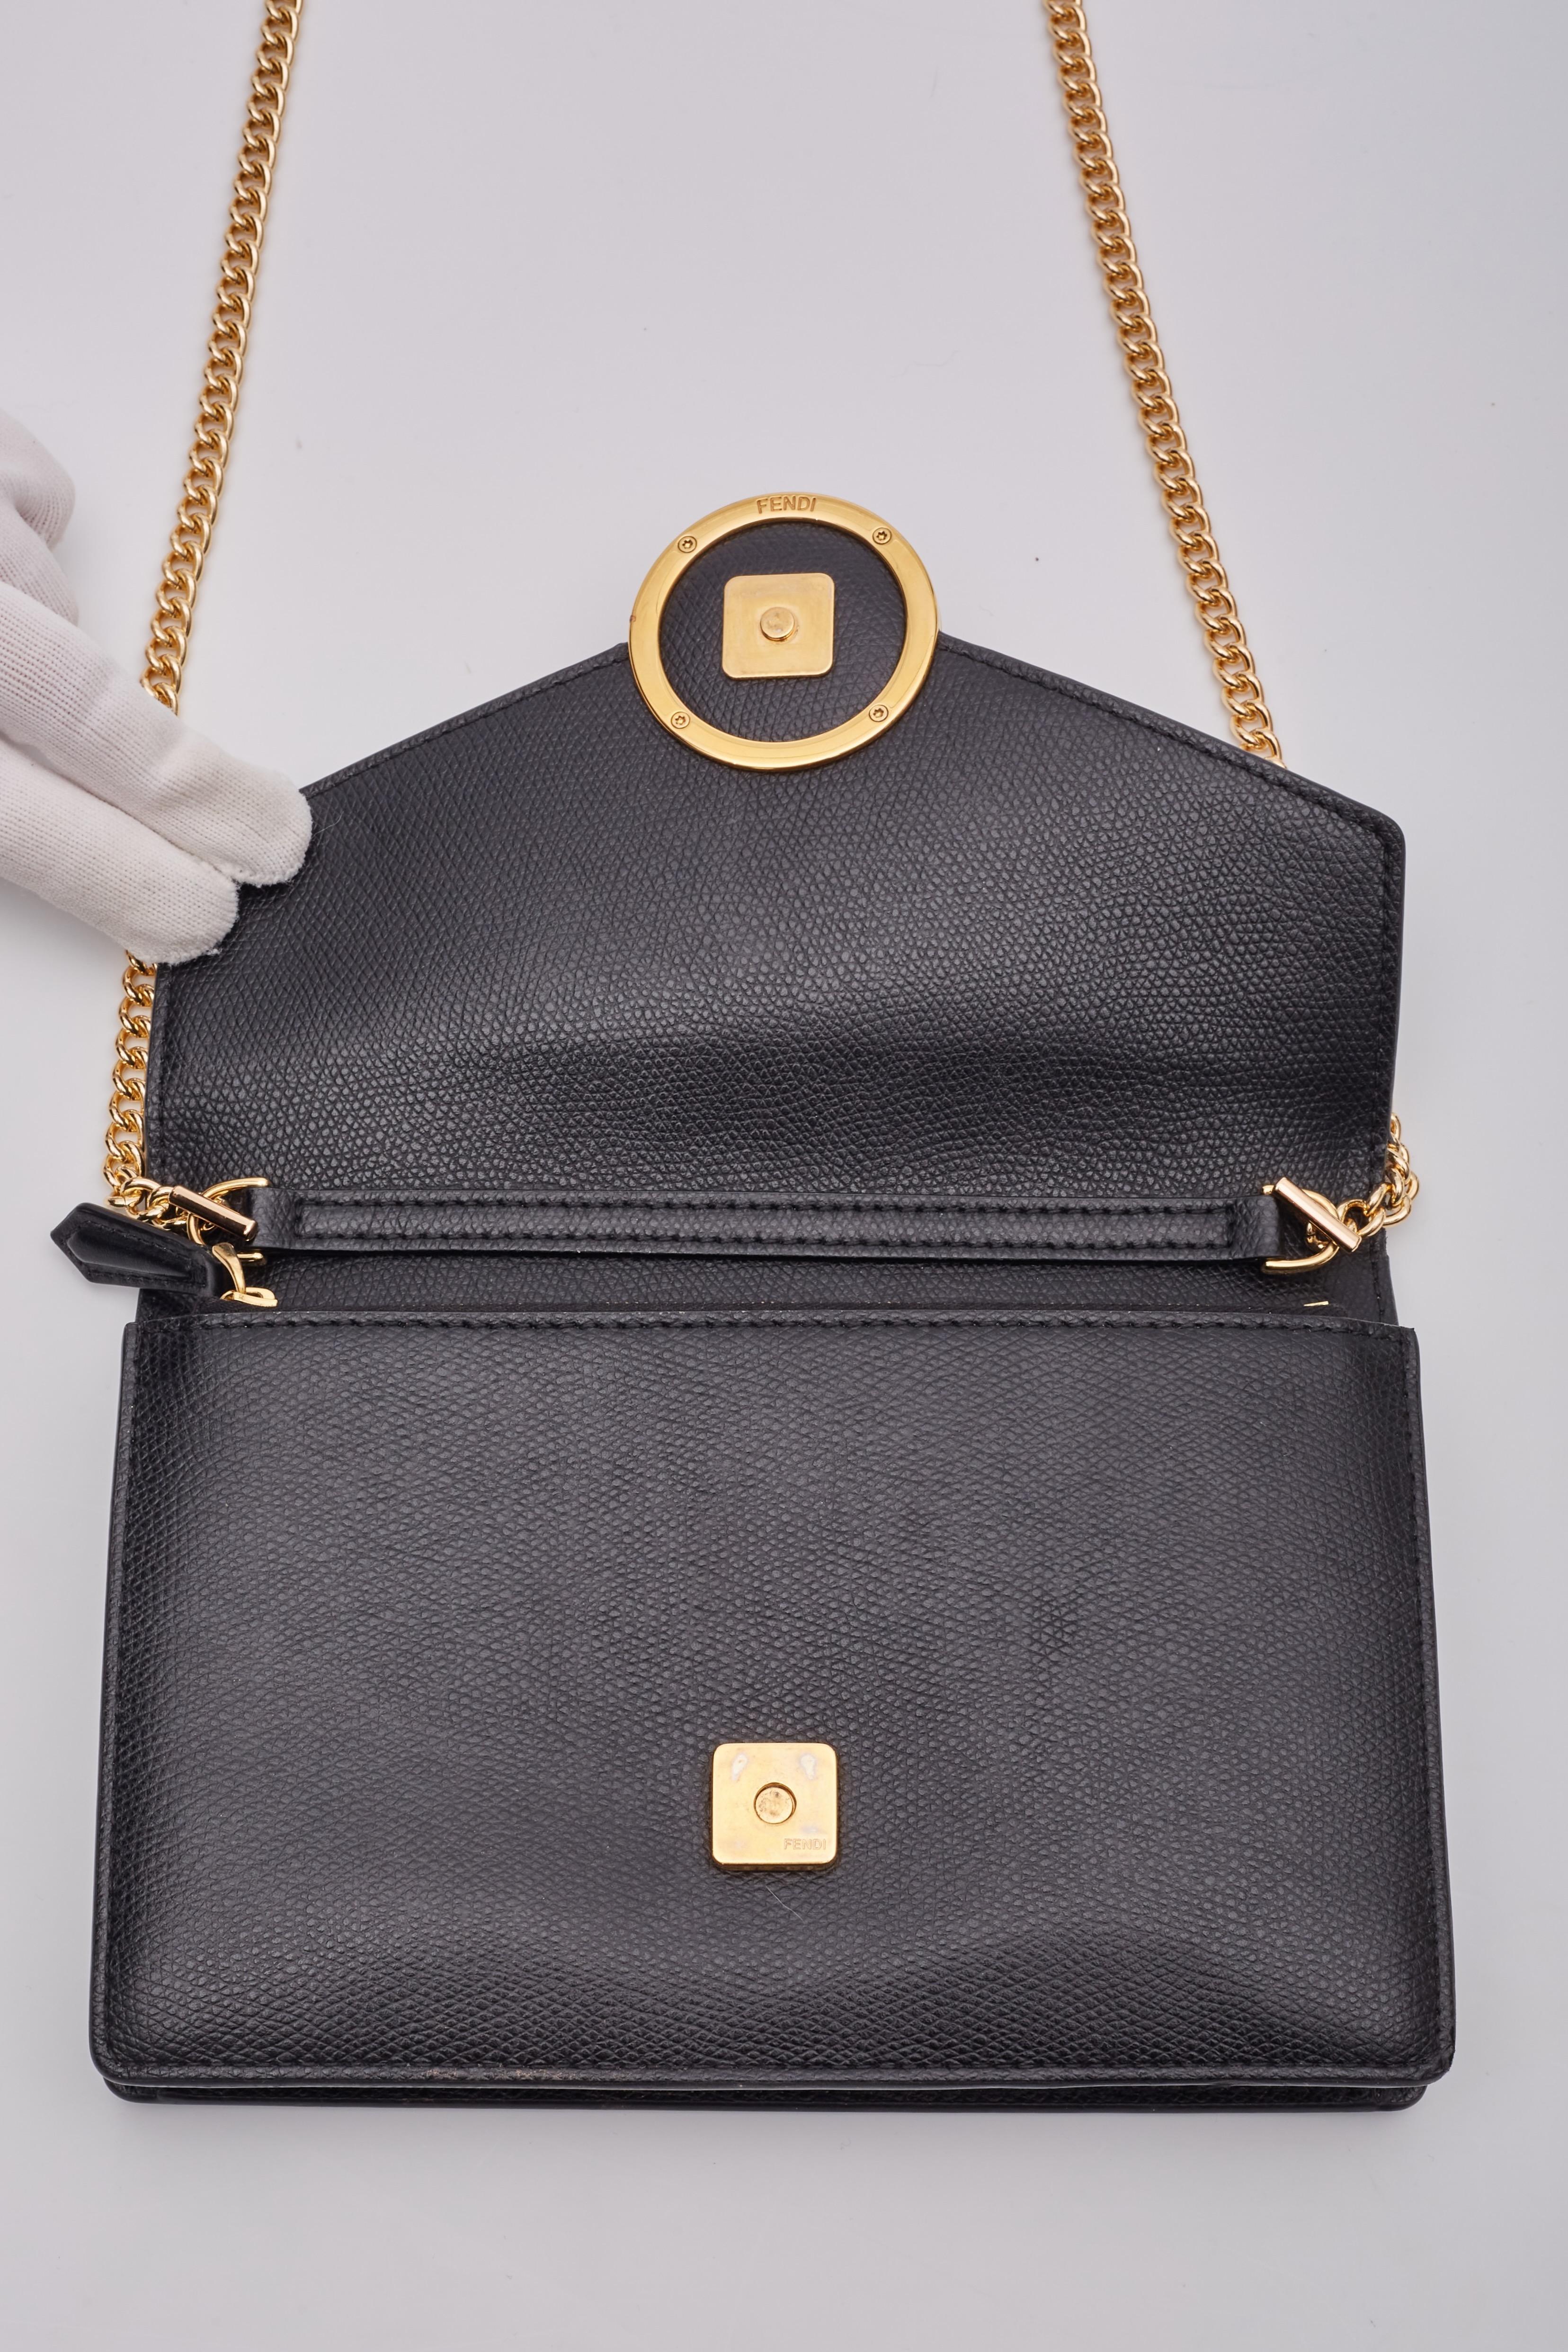 Fendi Black Leather F Logo Wallet On Chain Bag For Sale 4